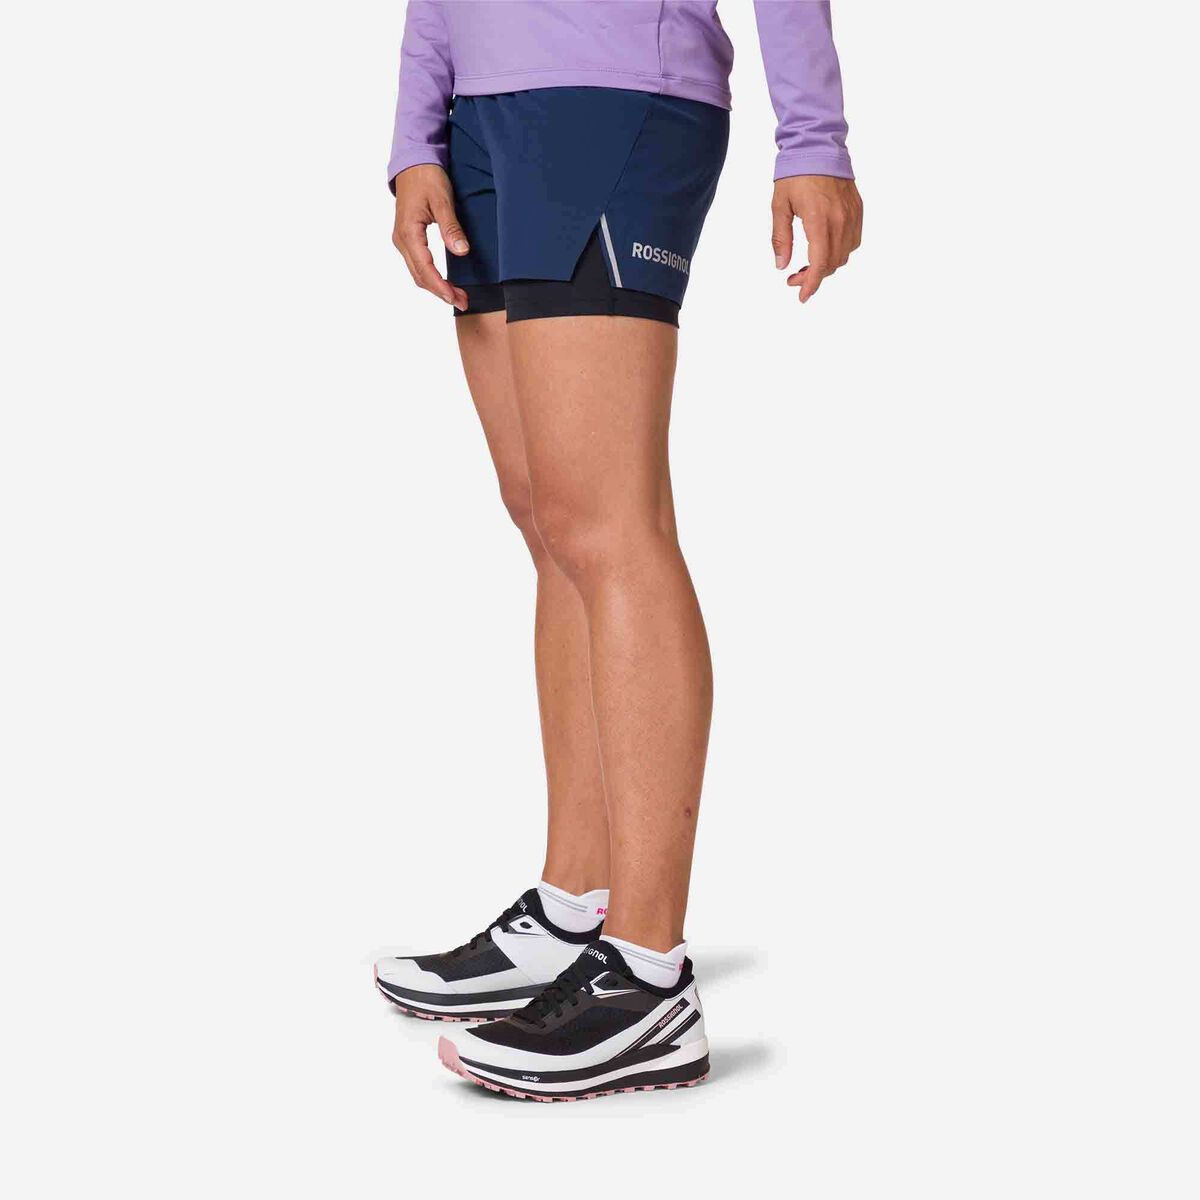 Rossignol Women's trail running shorts, Pants Women, Dark Navy